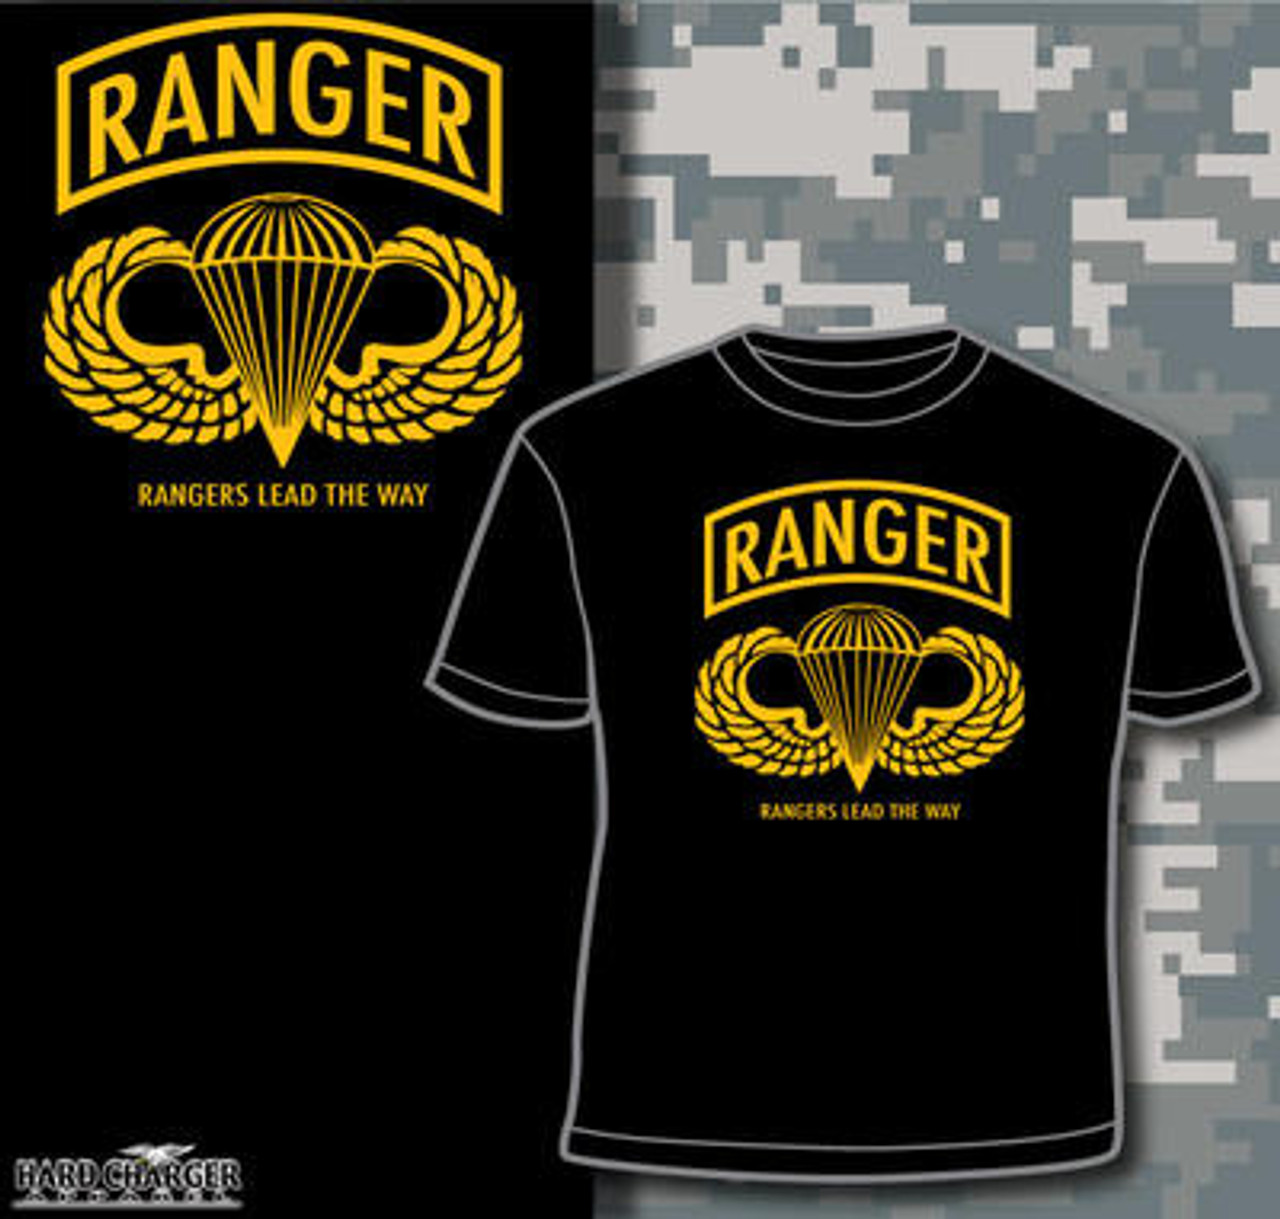 ranger t shirts army